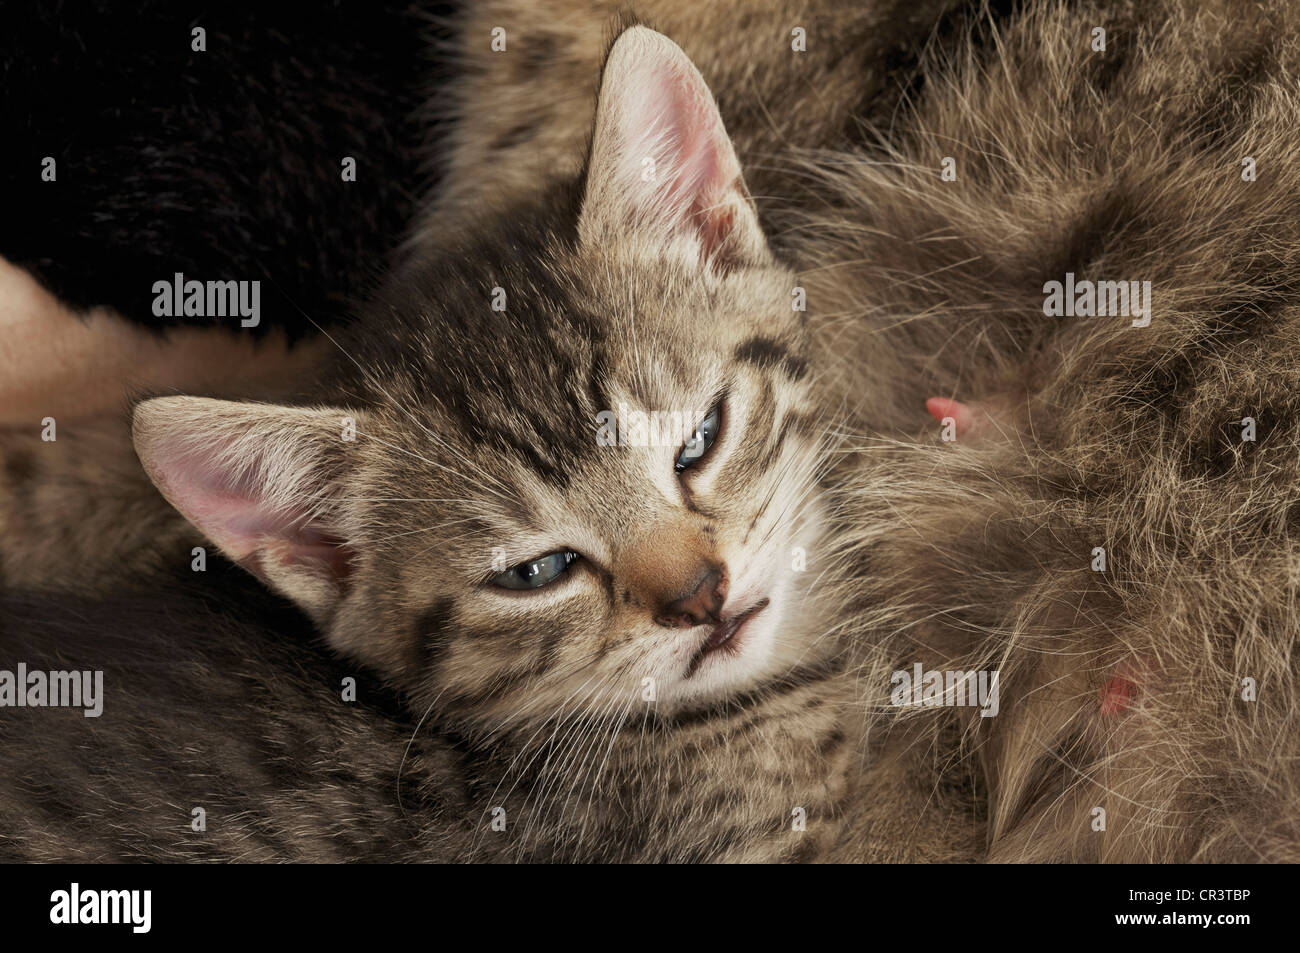 Kitten, head in front of cat's teats Stock Photo